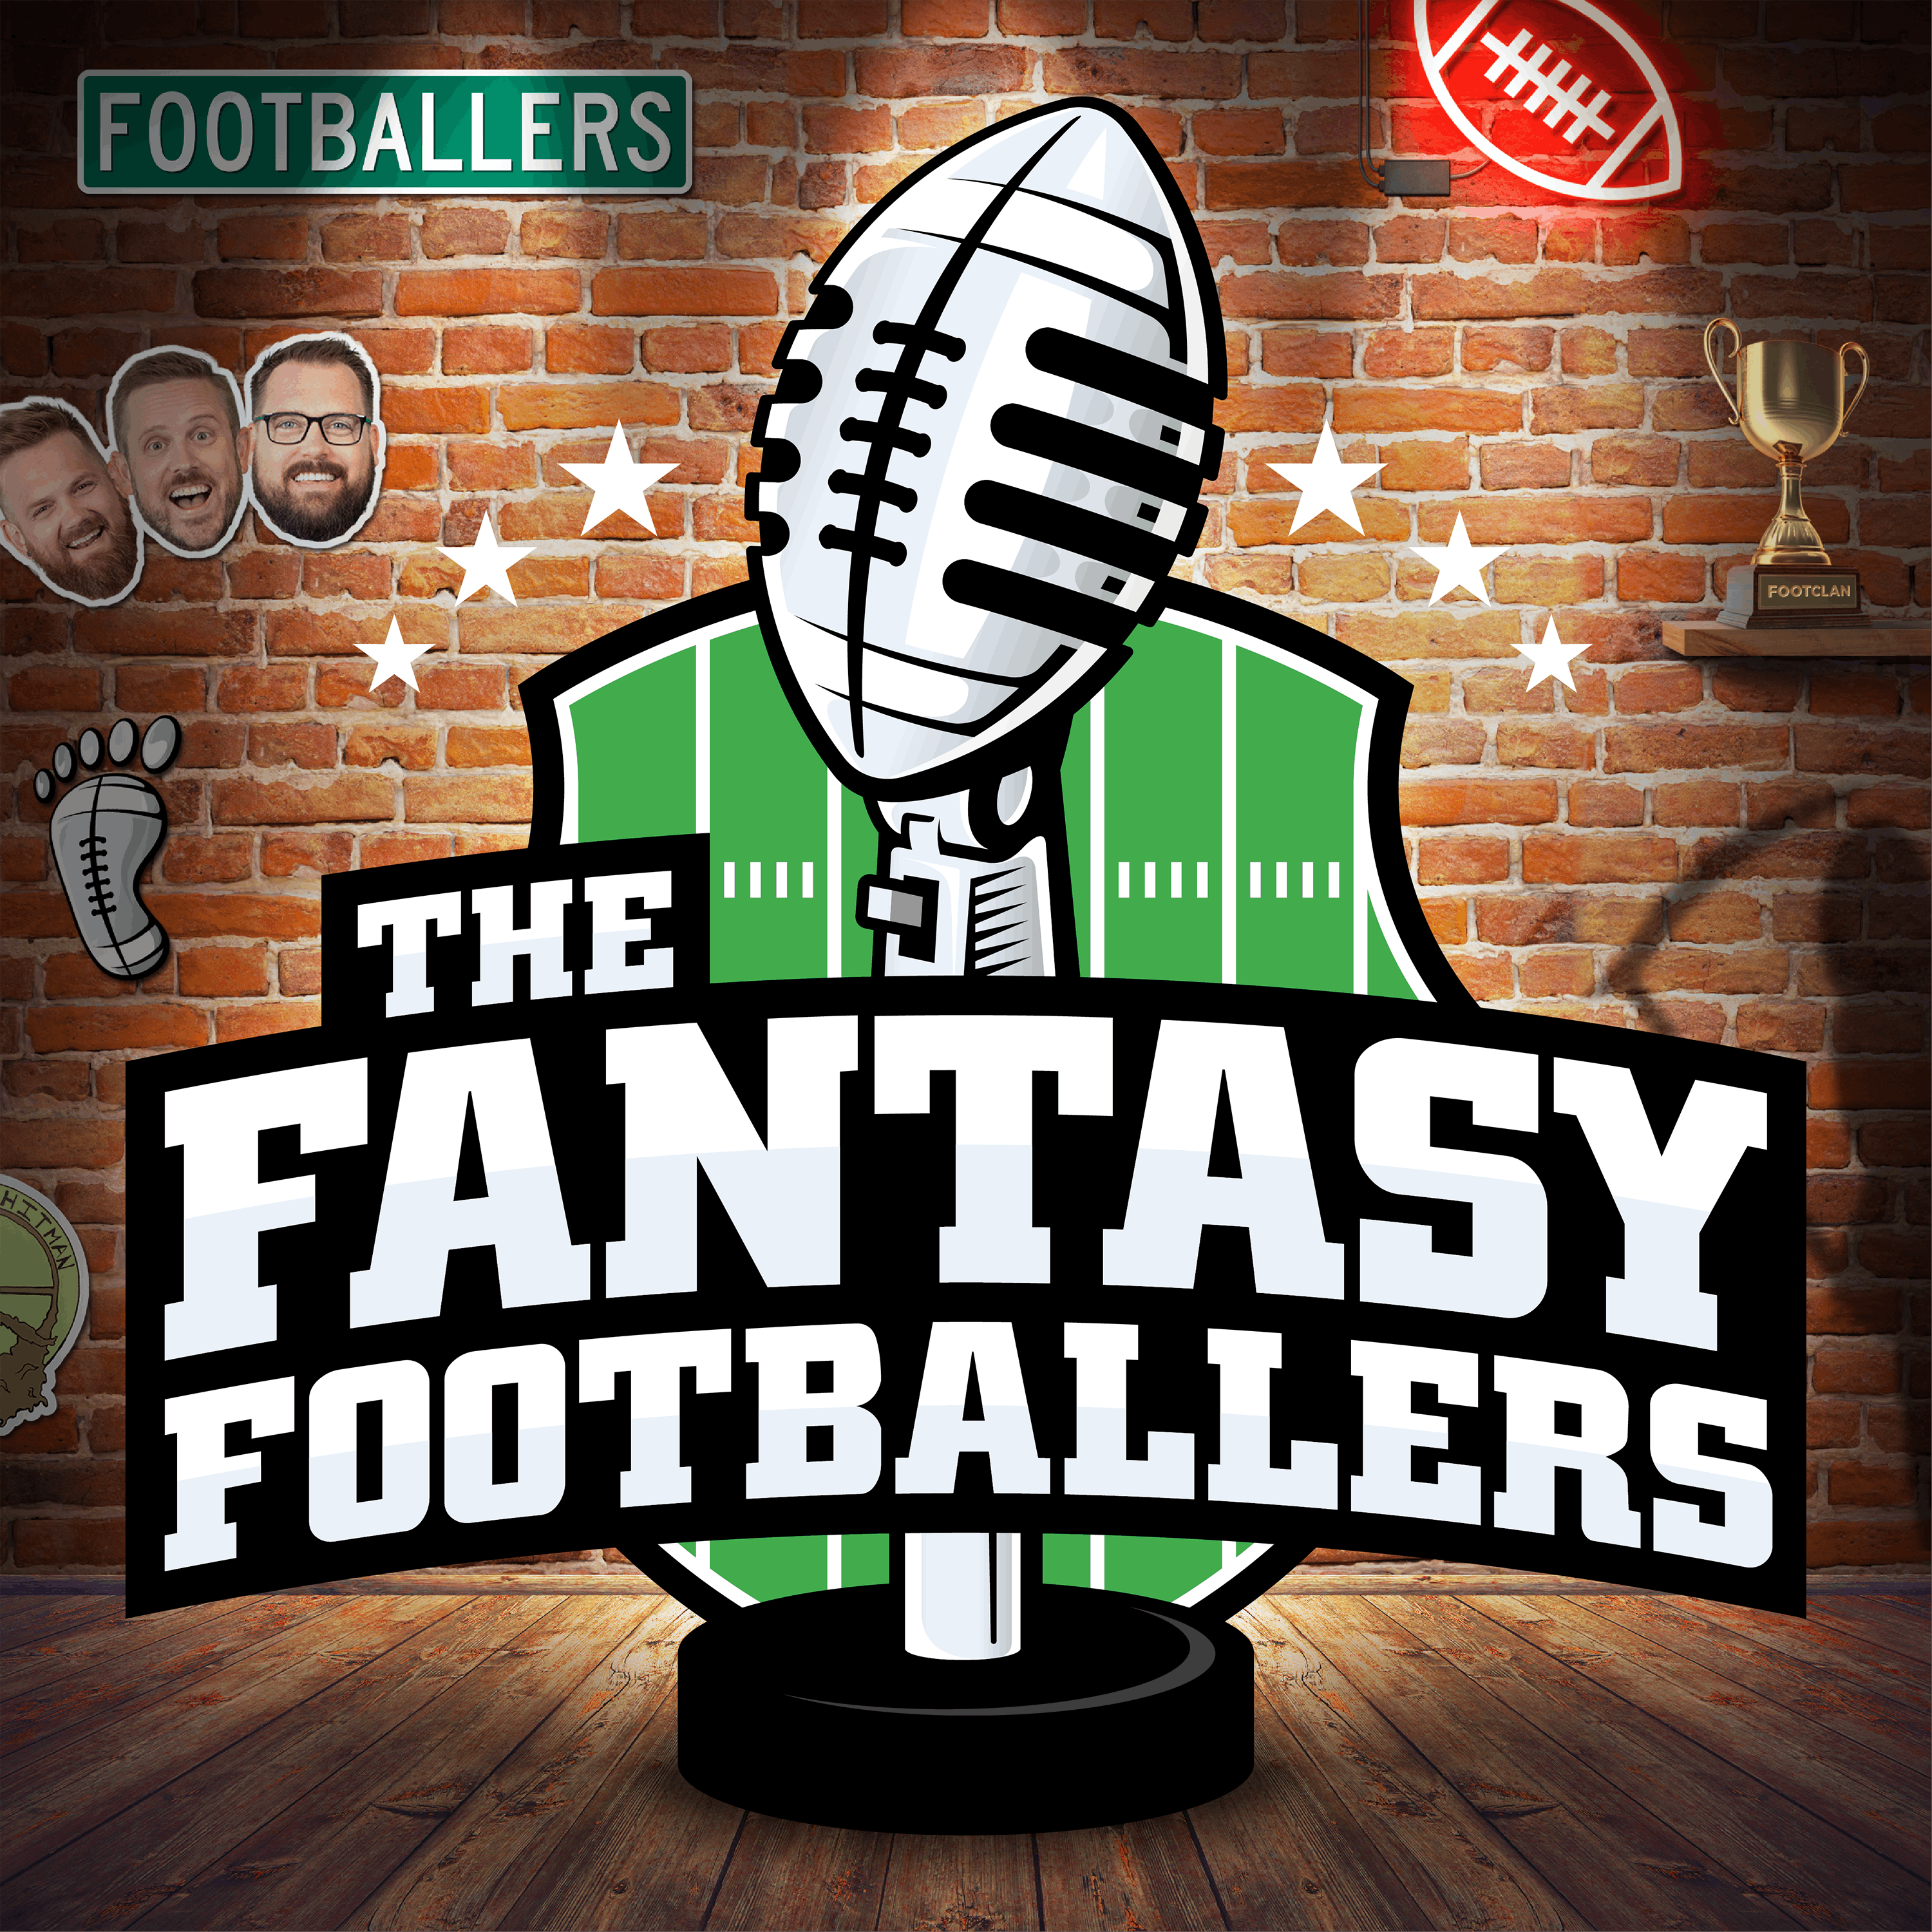 Fantasy Footballers - Fantasy Football Podcast podcast show image